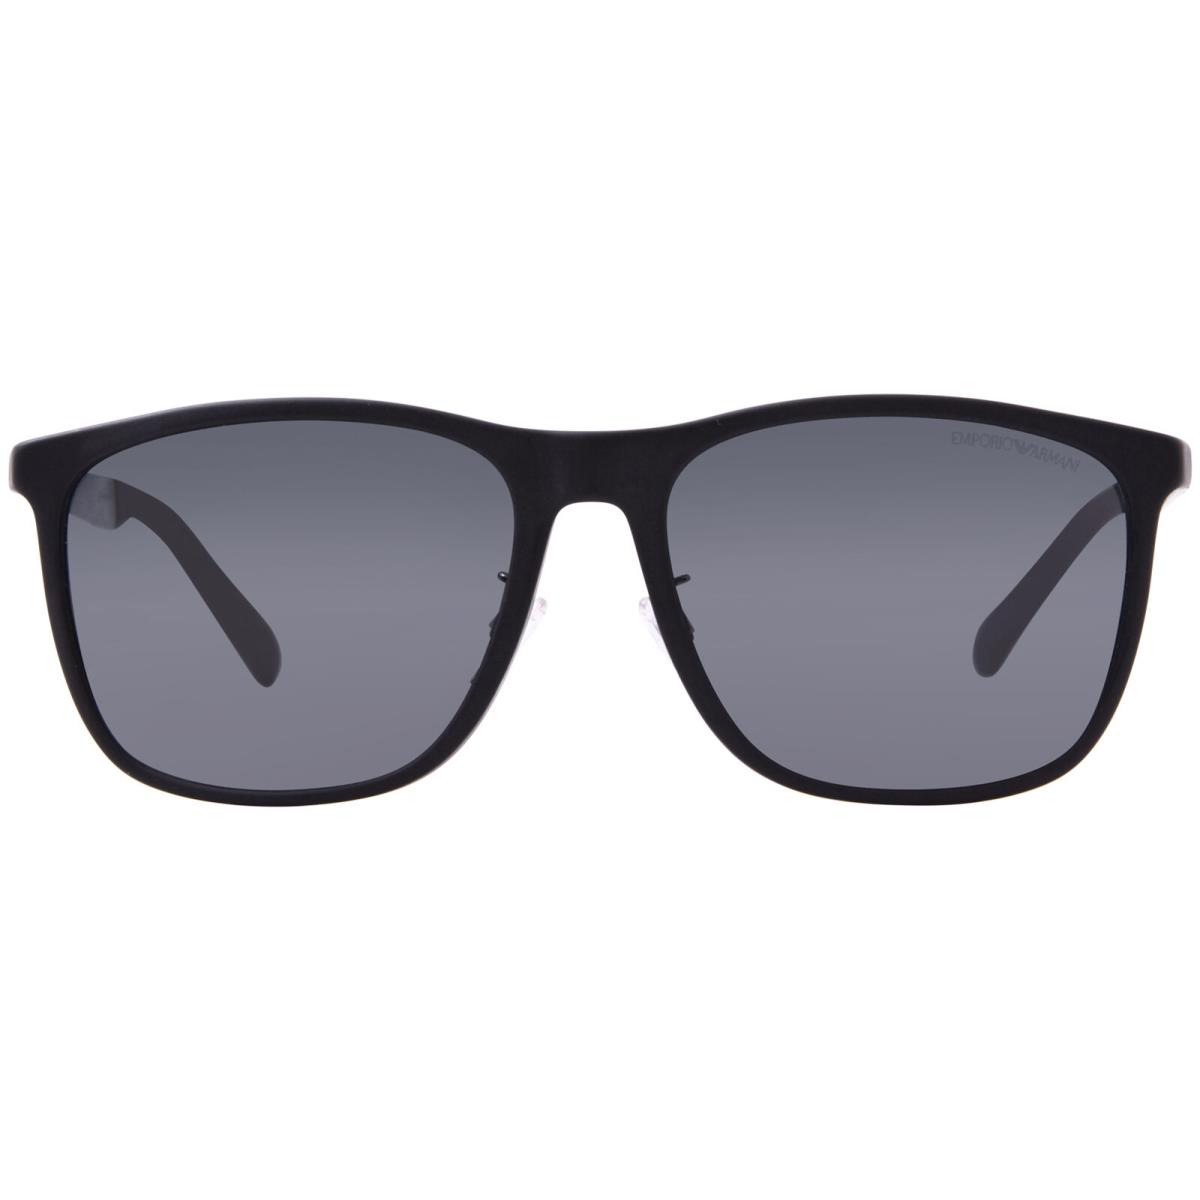 Emporio Armani EA4150F 506387 Sunglasses Men`s Black/grey Rectangle Shape 59mm